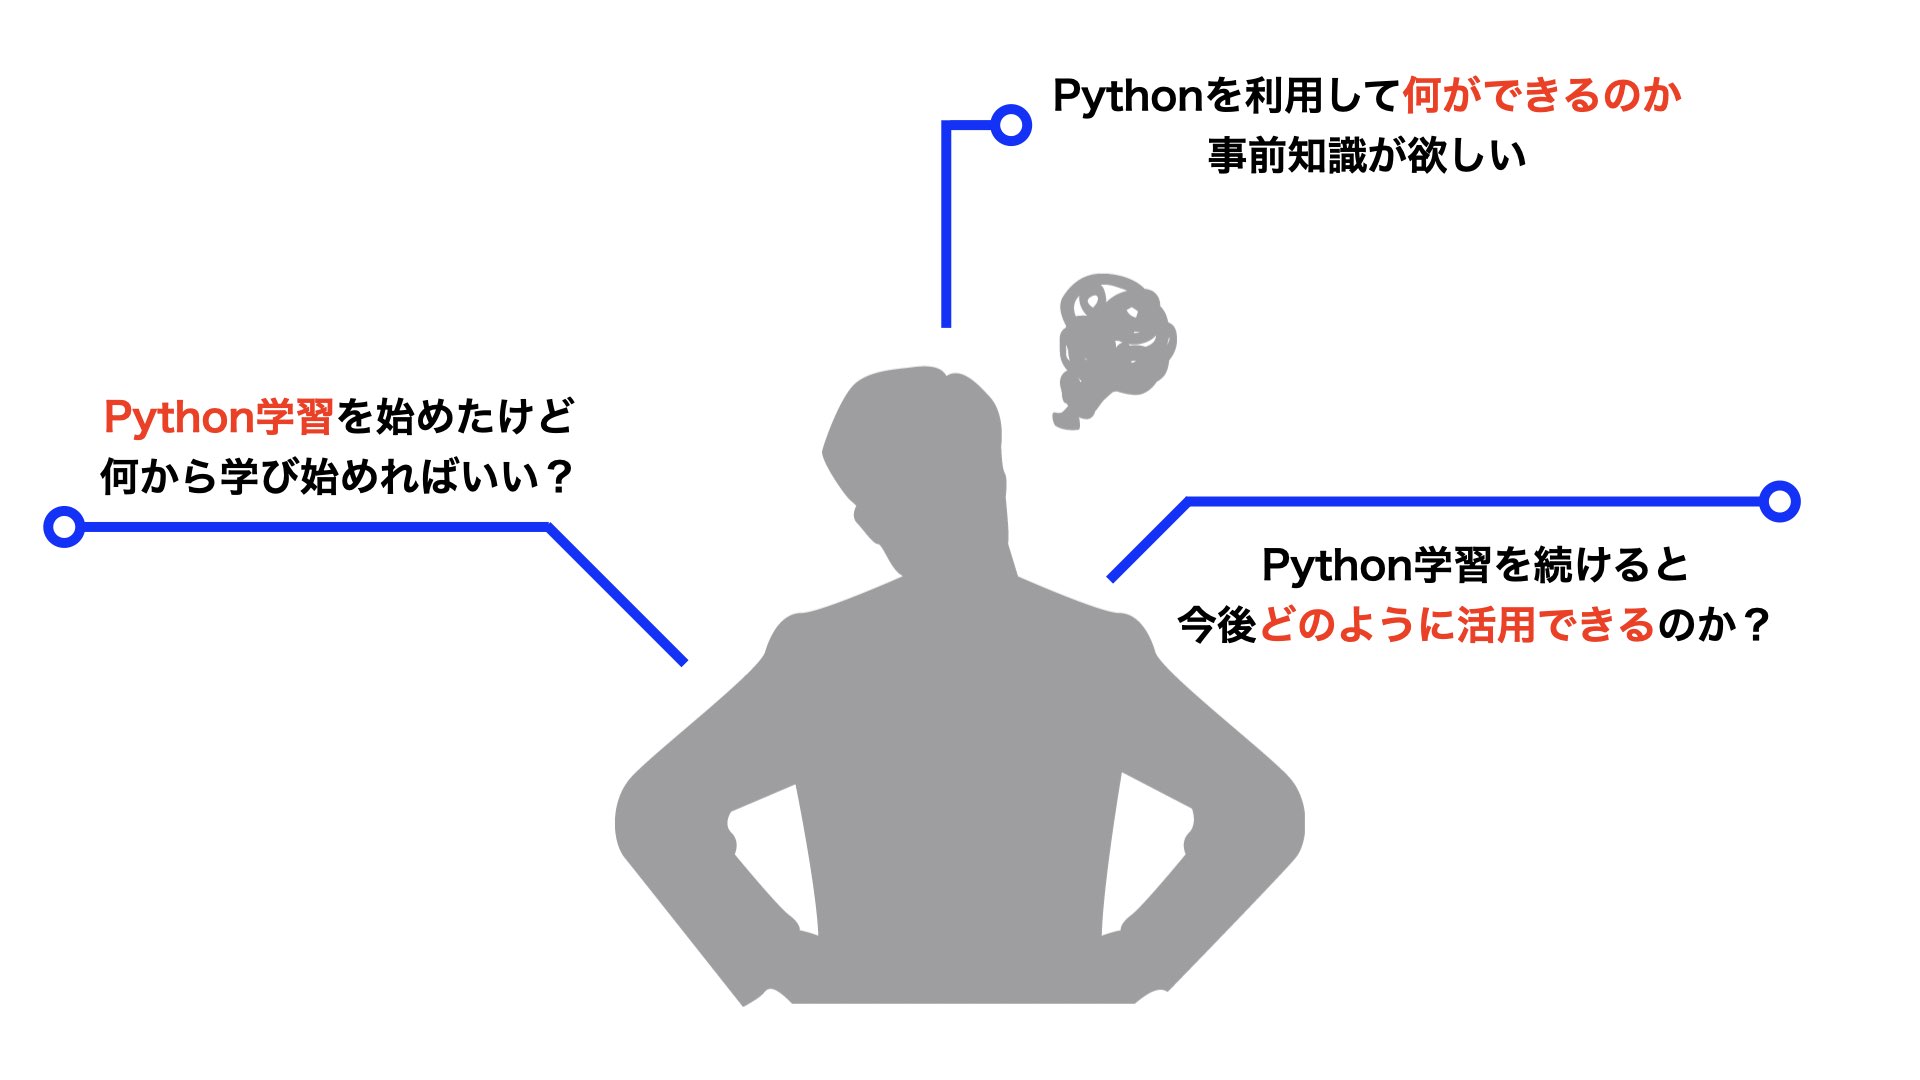 Python 初心者が作れるものやできることを目的別に学習方法解説 Analytics Board Python特化のプログラミングサイト